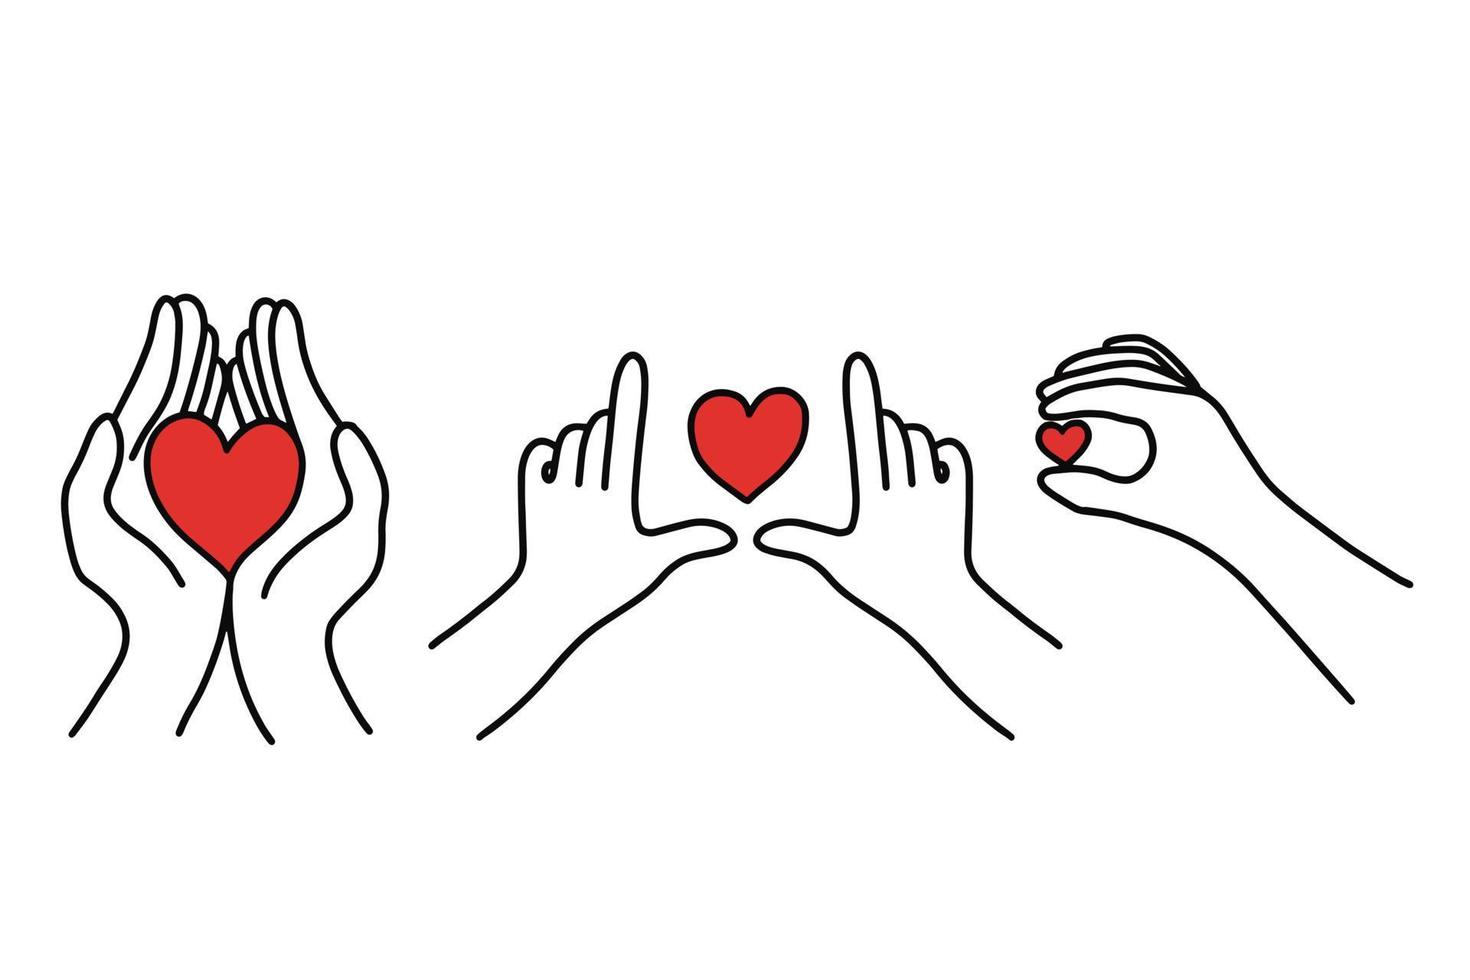 Women Girl Hand Love Gesture with Hearth Flat line Art illustration vector